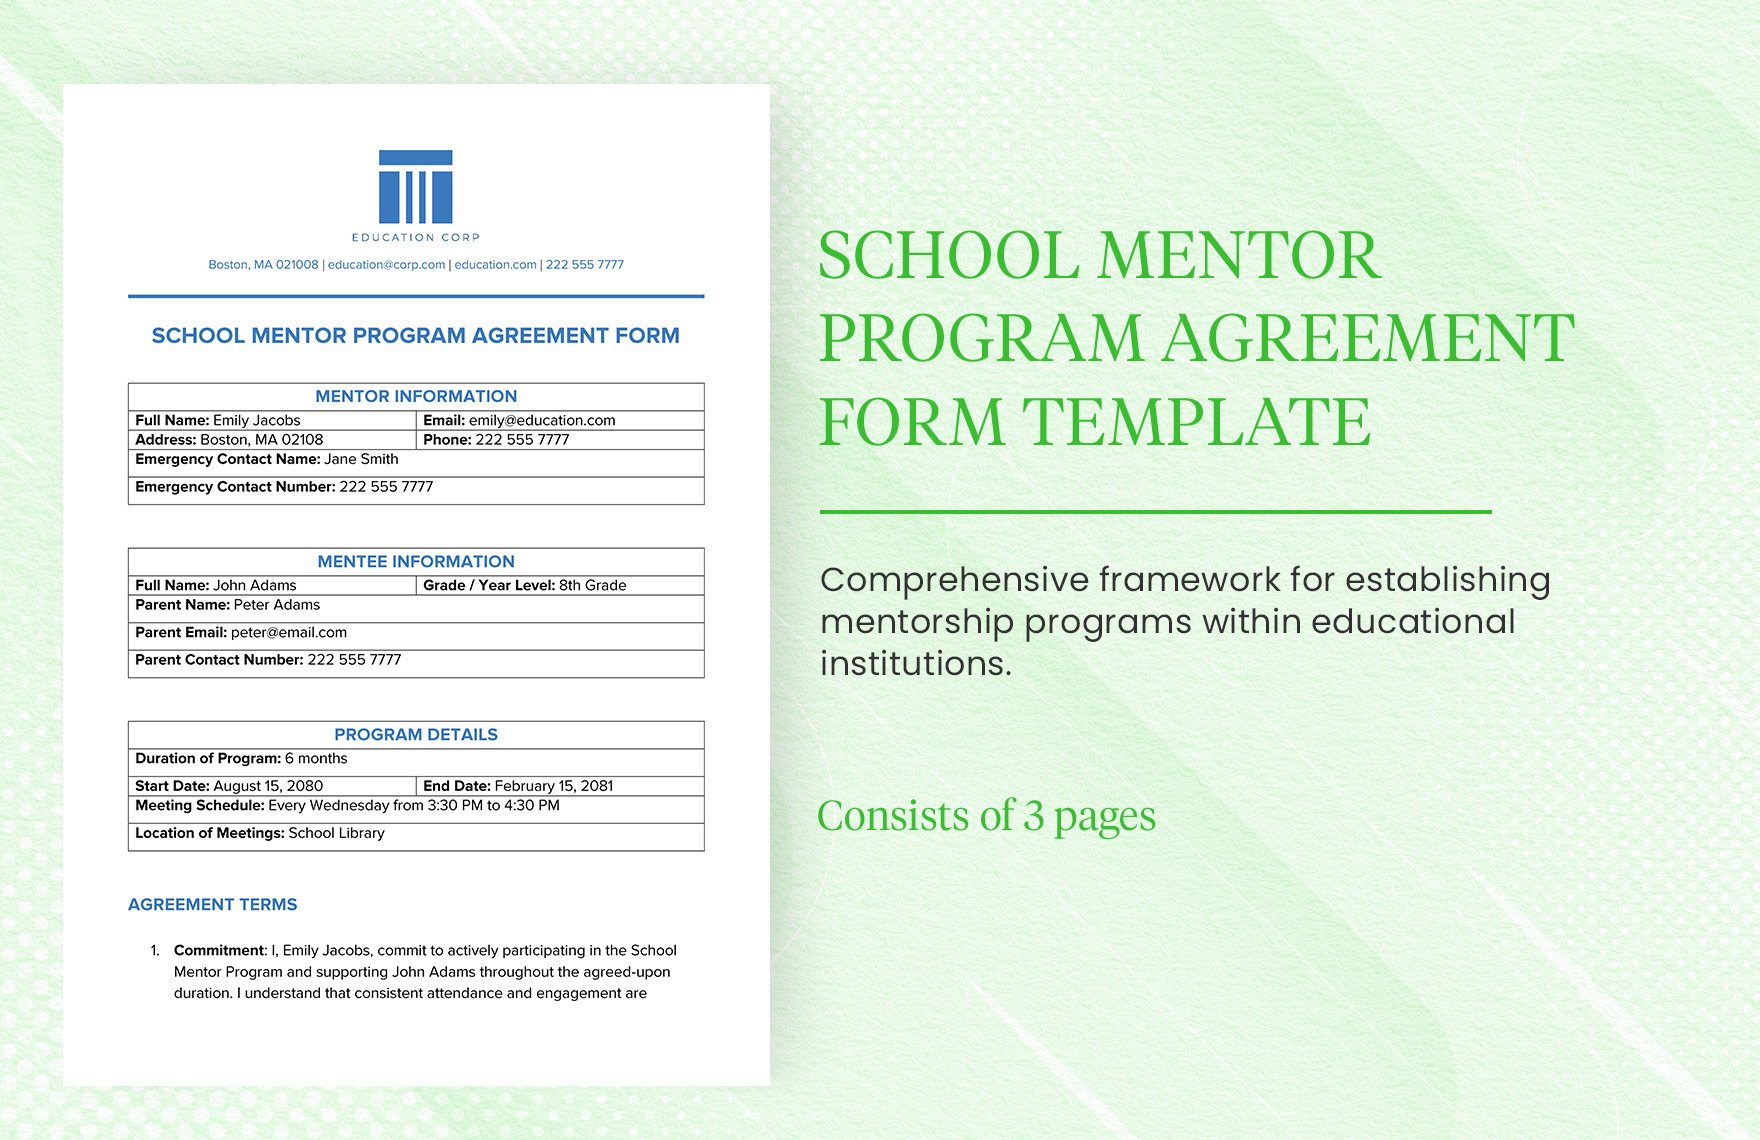 School Mentor Program Agreement Form Template